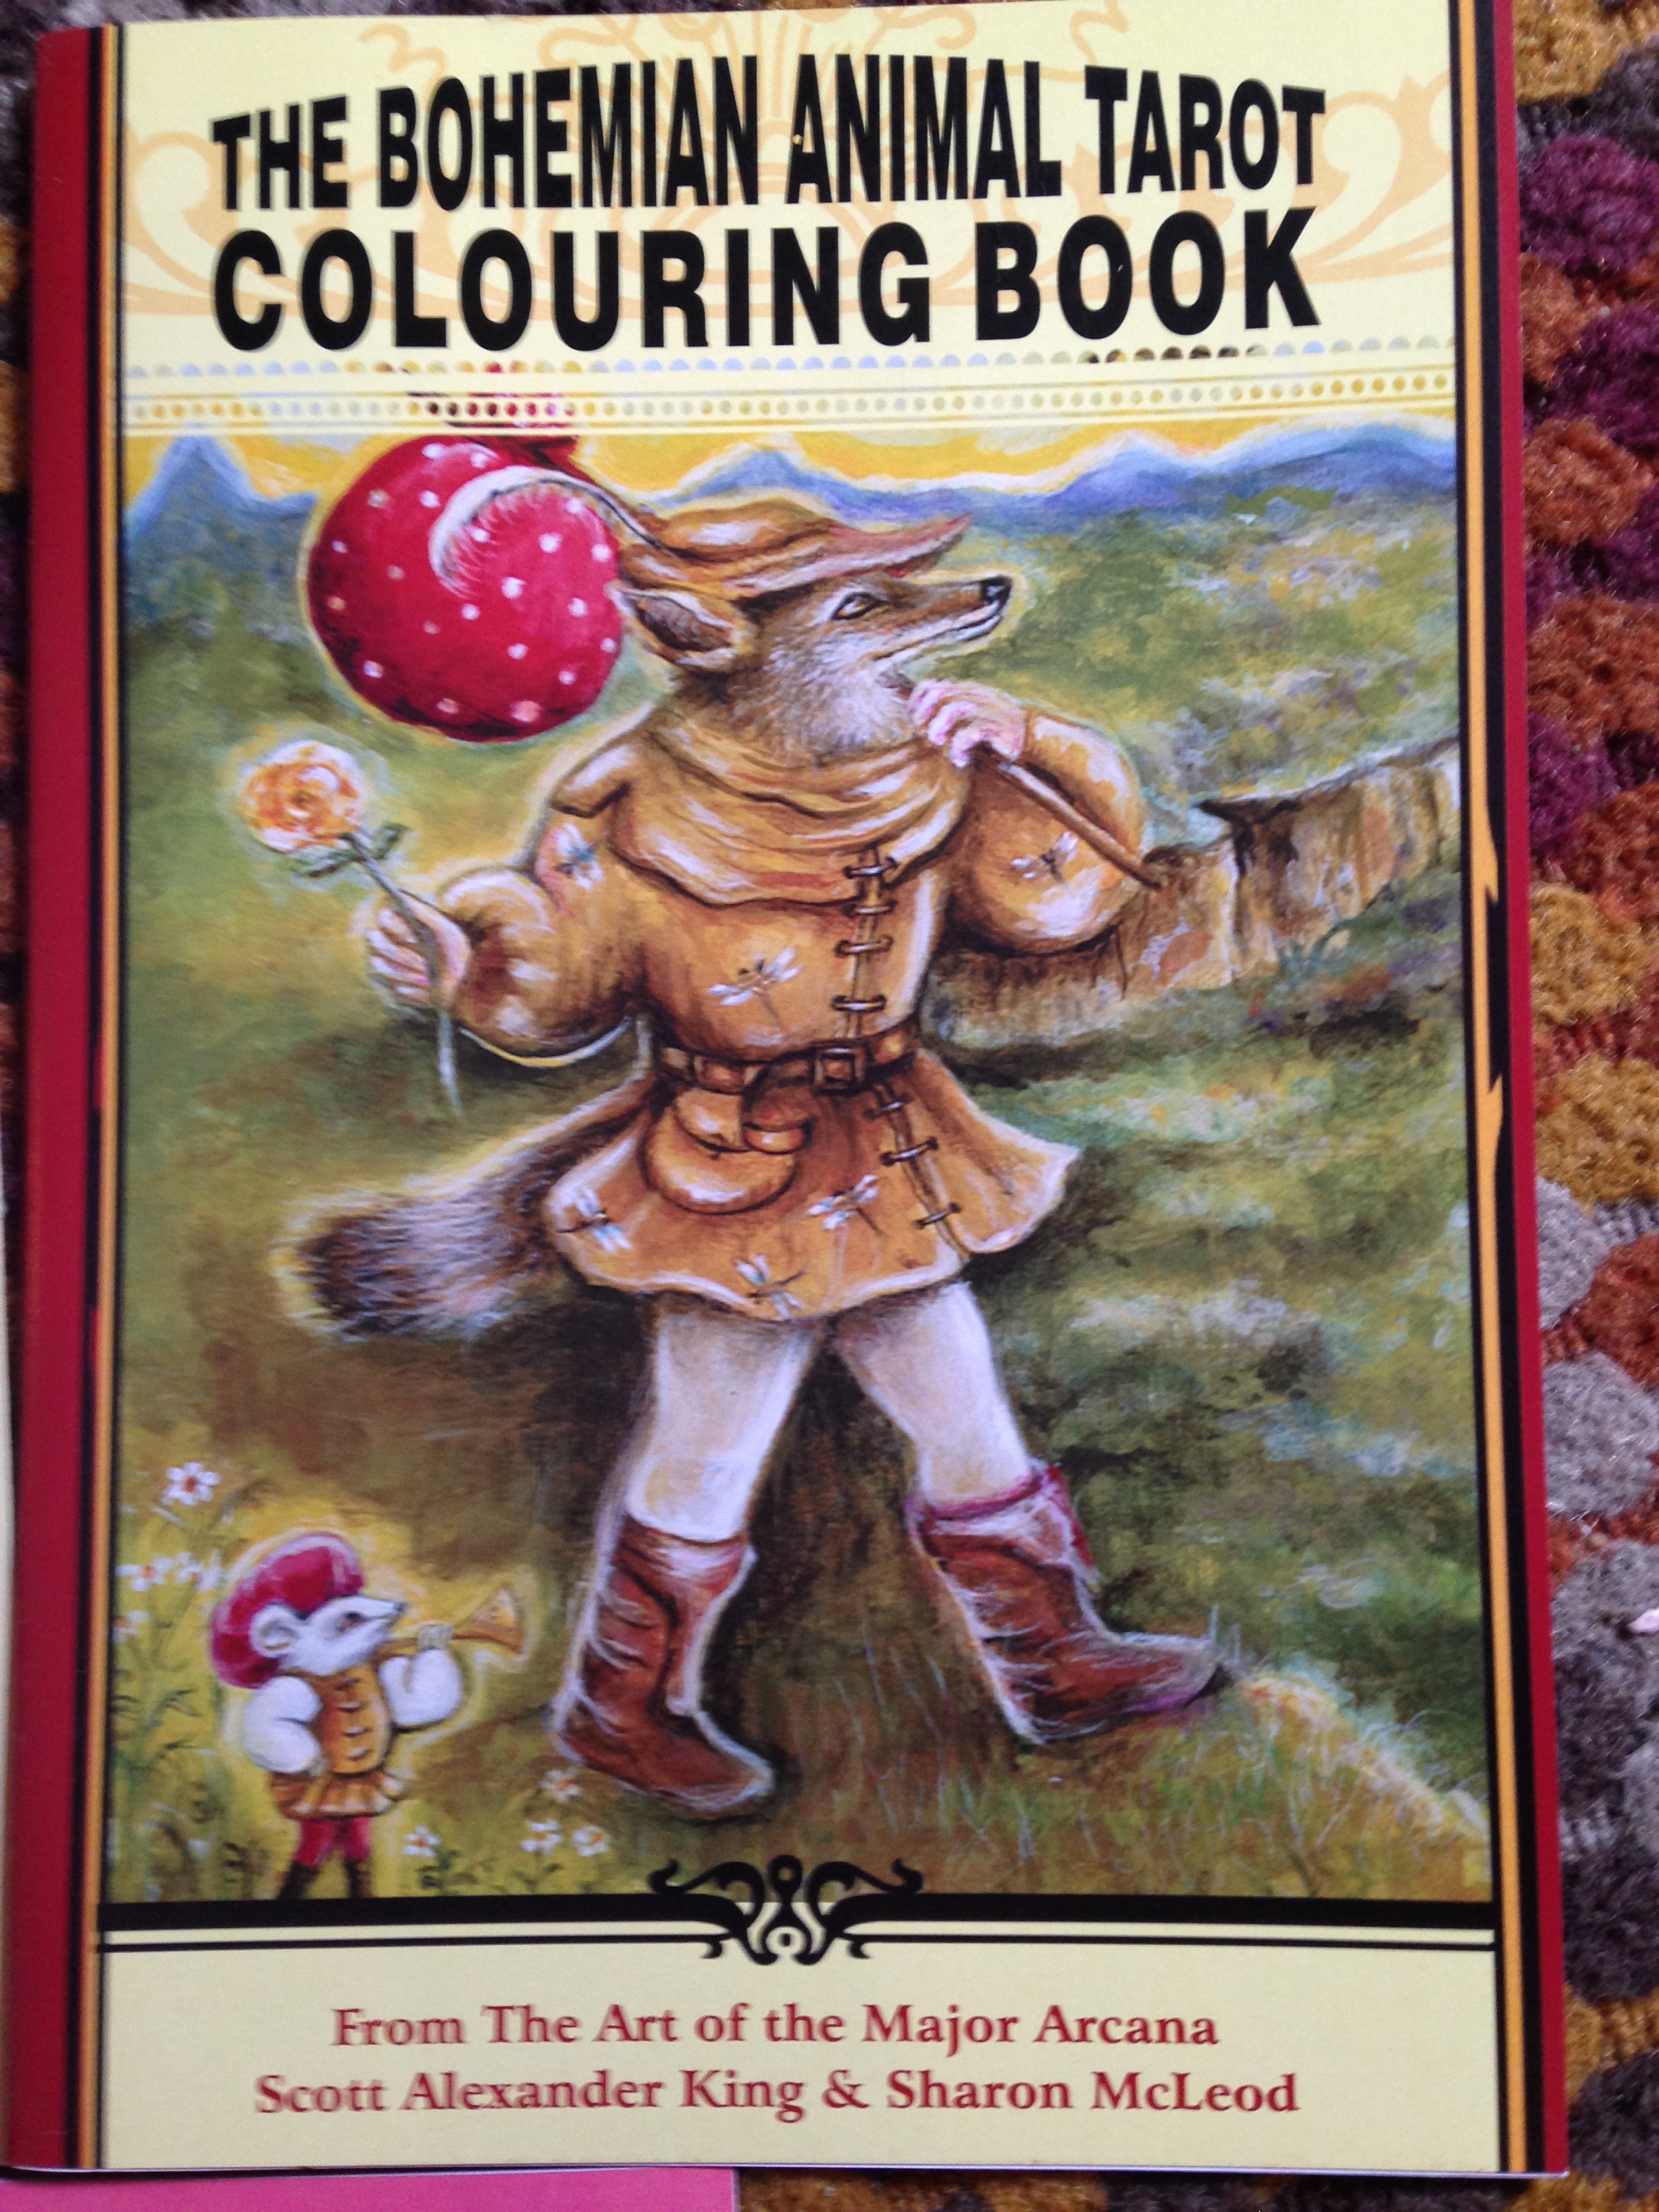 Bohemian Animal Tarot Colouring Book